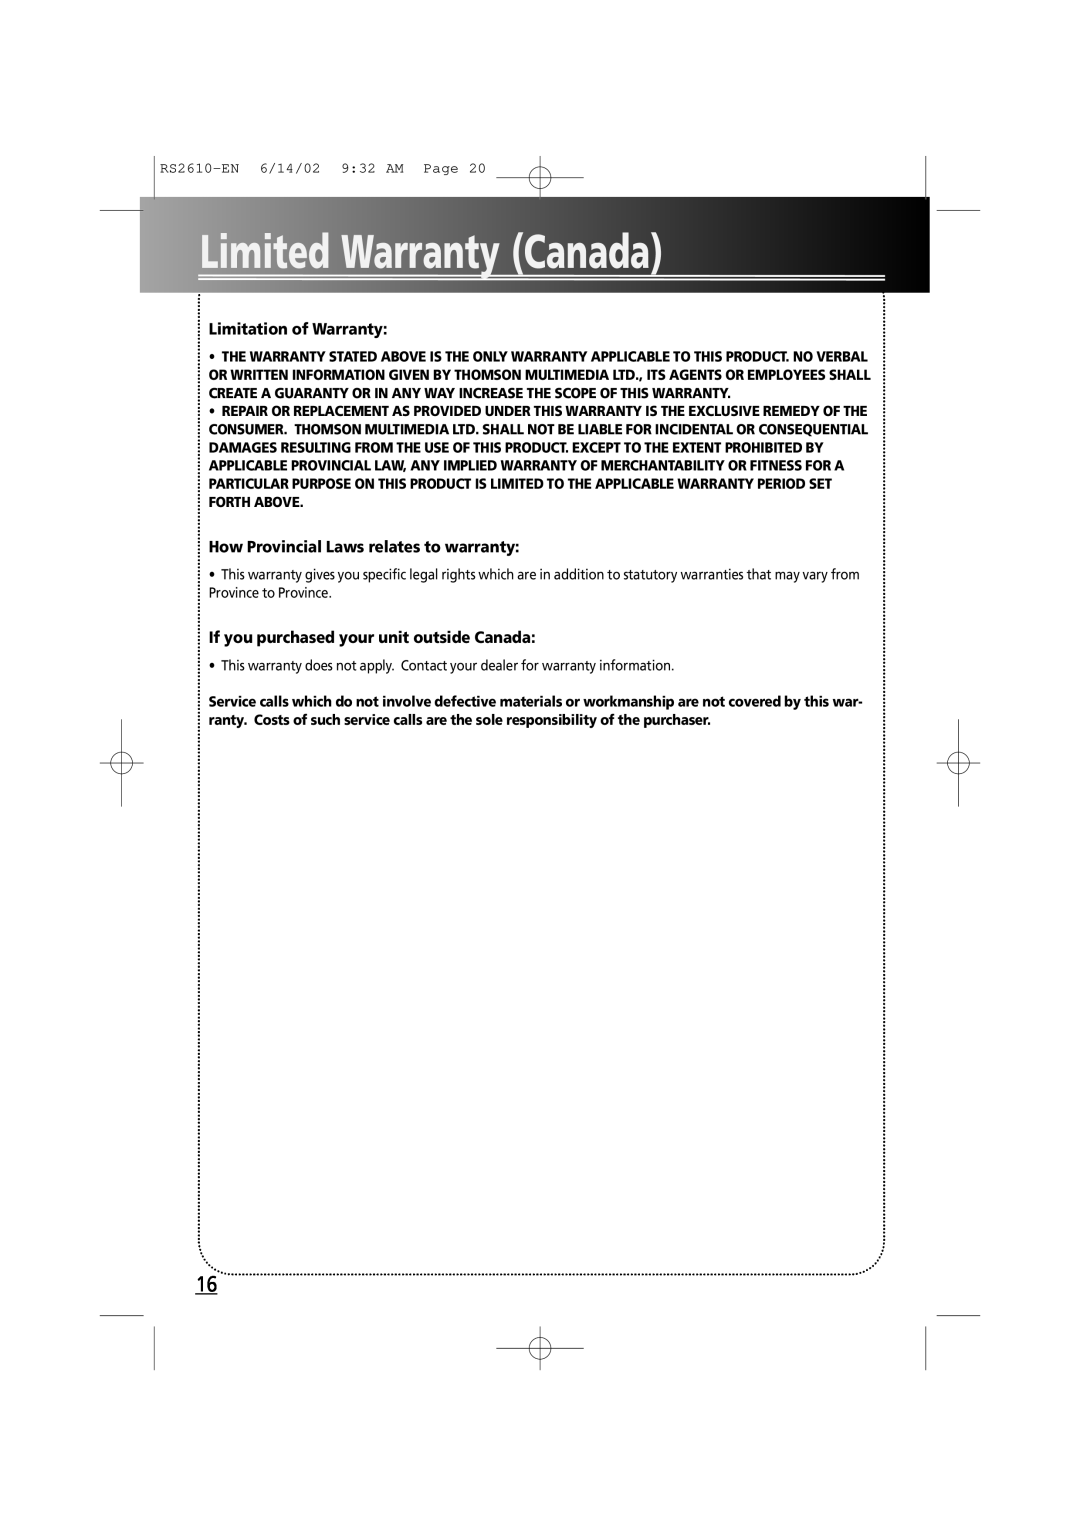 RCA fm radio tuner manual Limited Warranty Canada, Limitation of Warranty, How Provincial Laws relates to warranty 